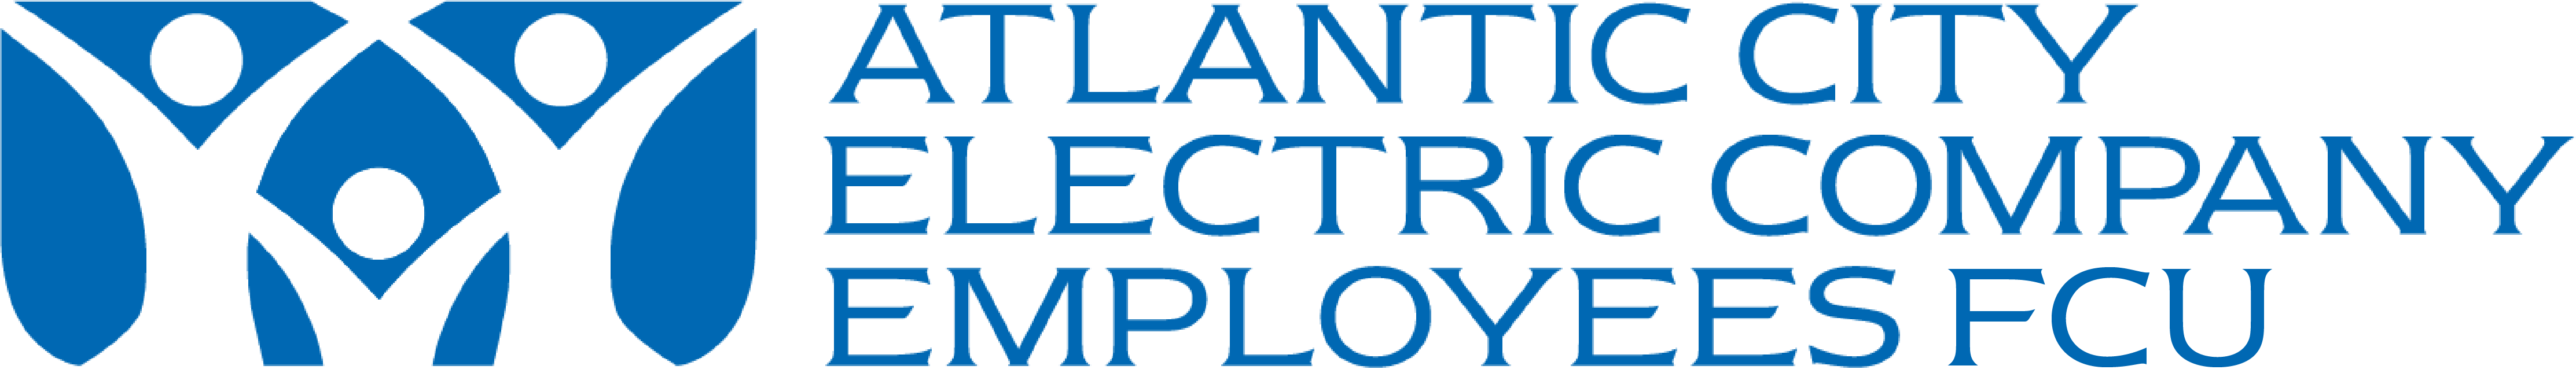 Atlantic City Electric Company Employees FCU